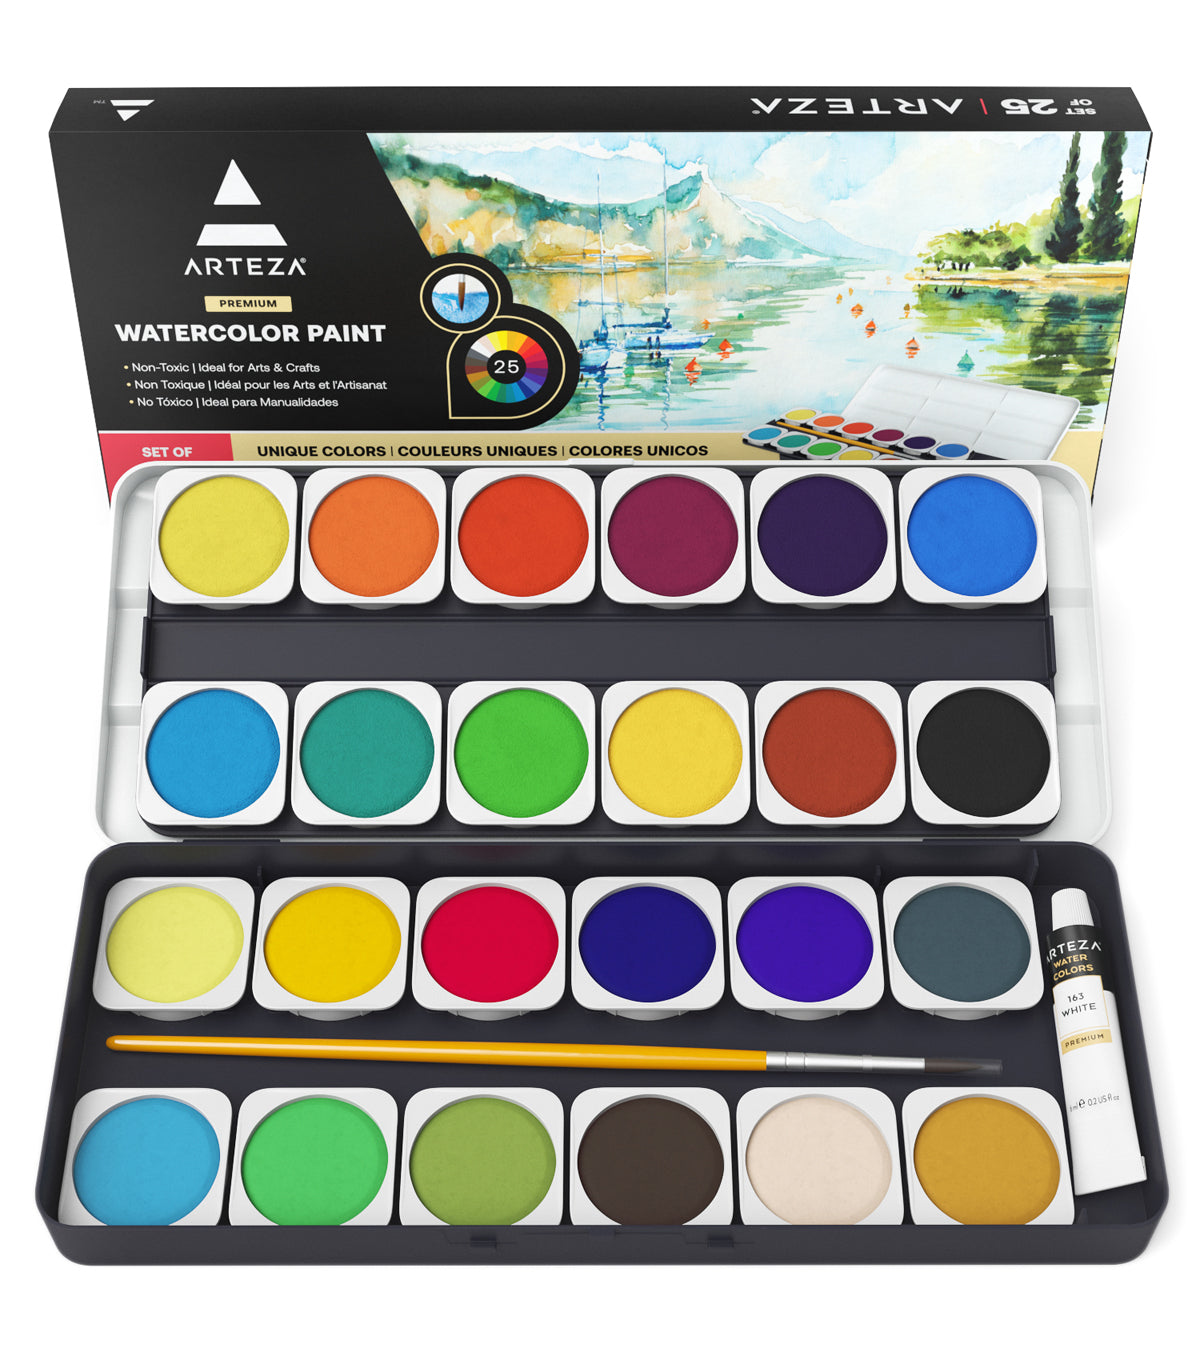 Watercolor Artist Paint, Opaque Colors in Pans - Set of 25